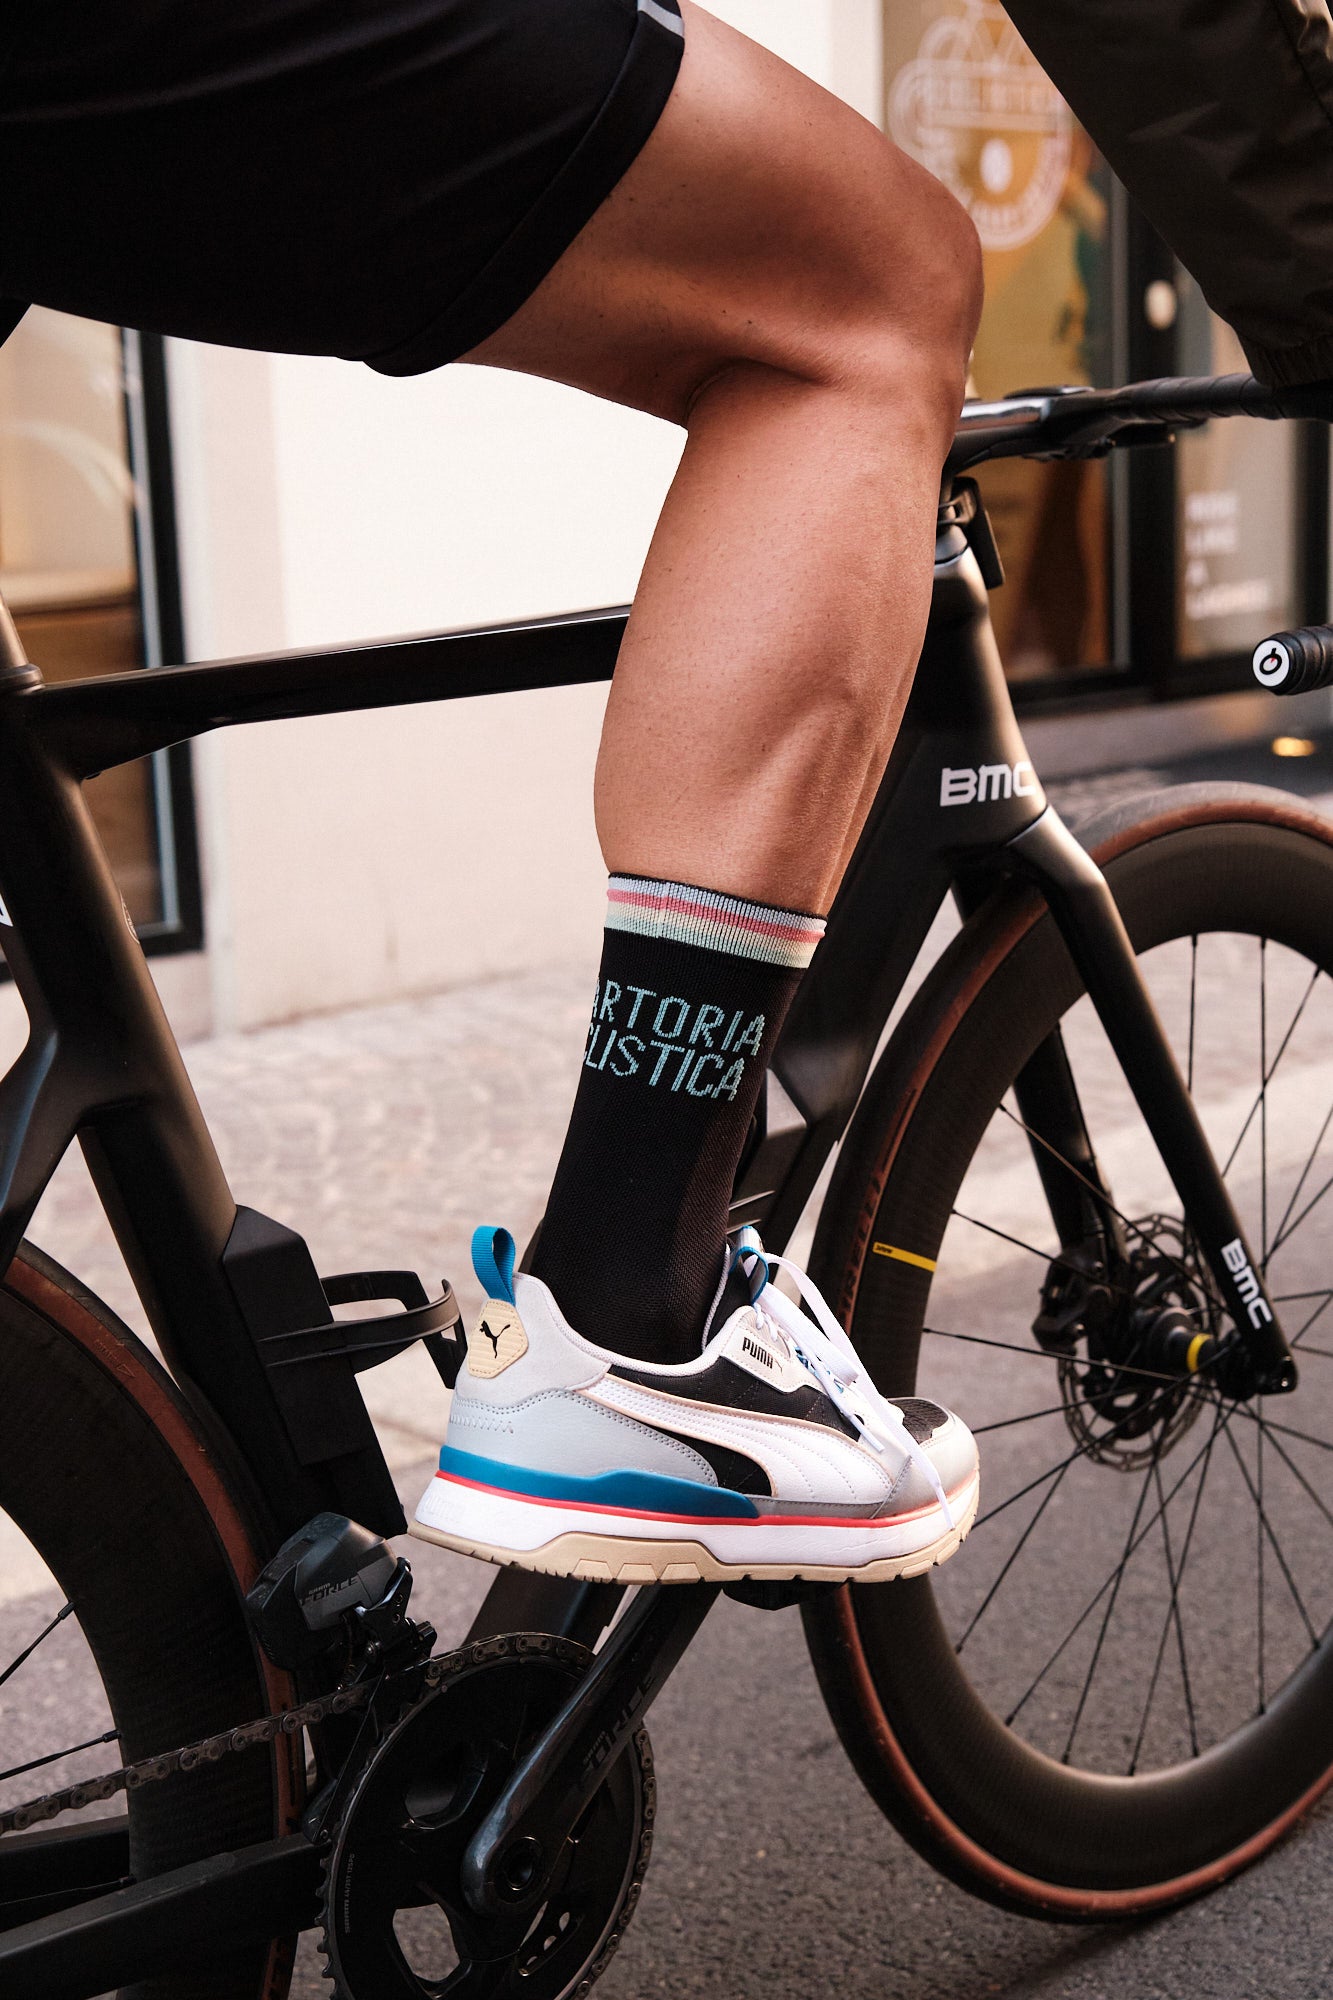 Black Sartoria ciclistica socks